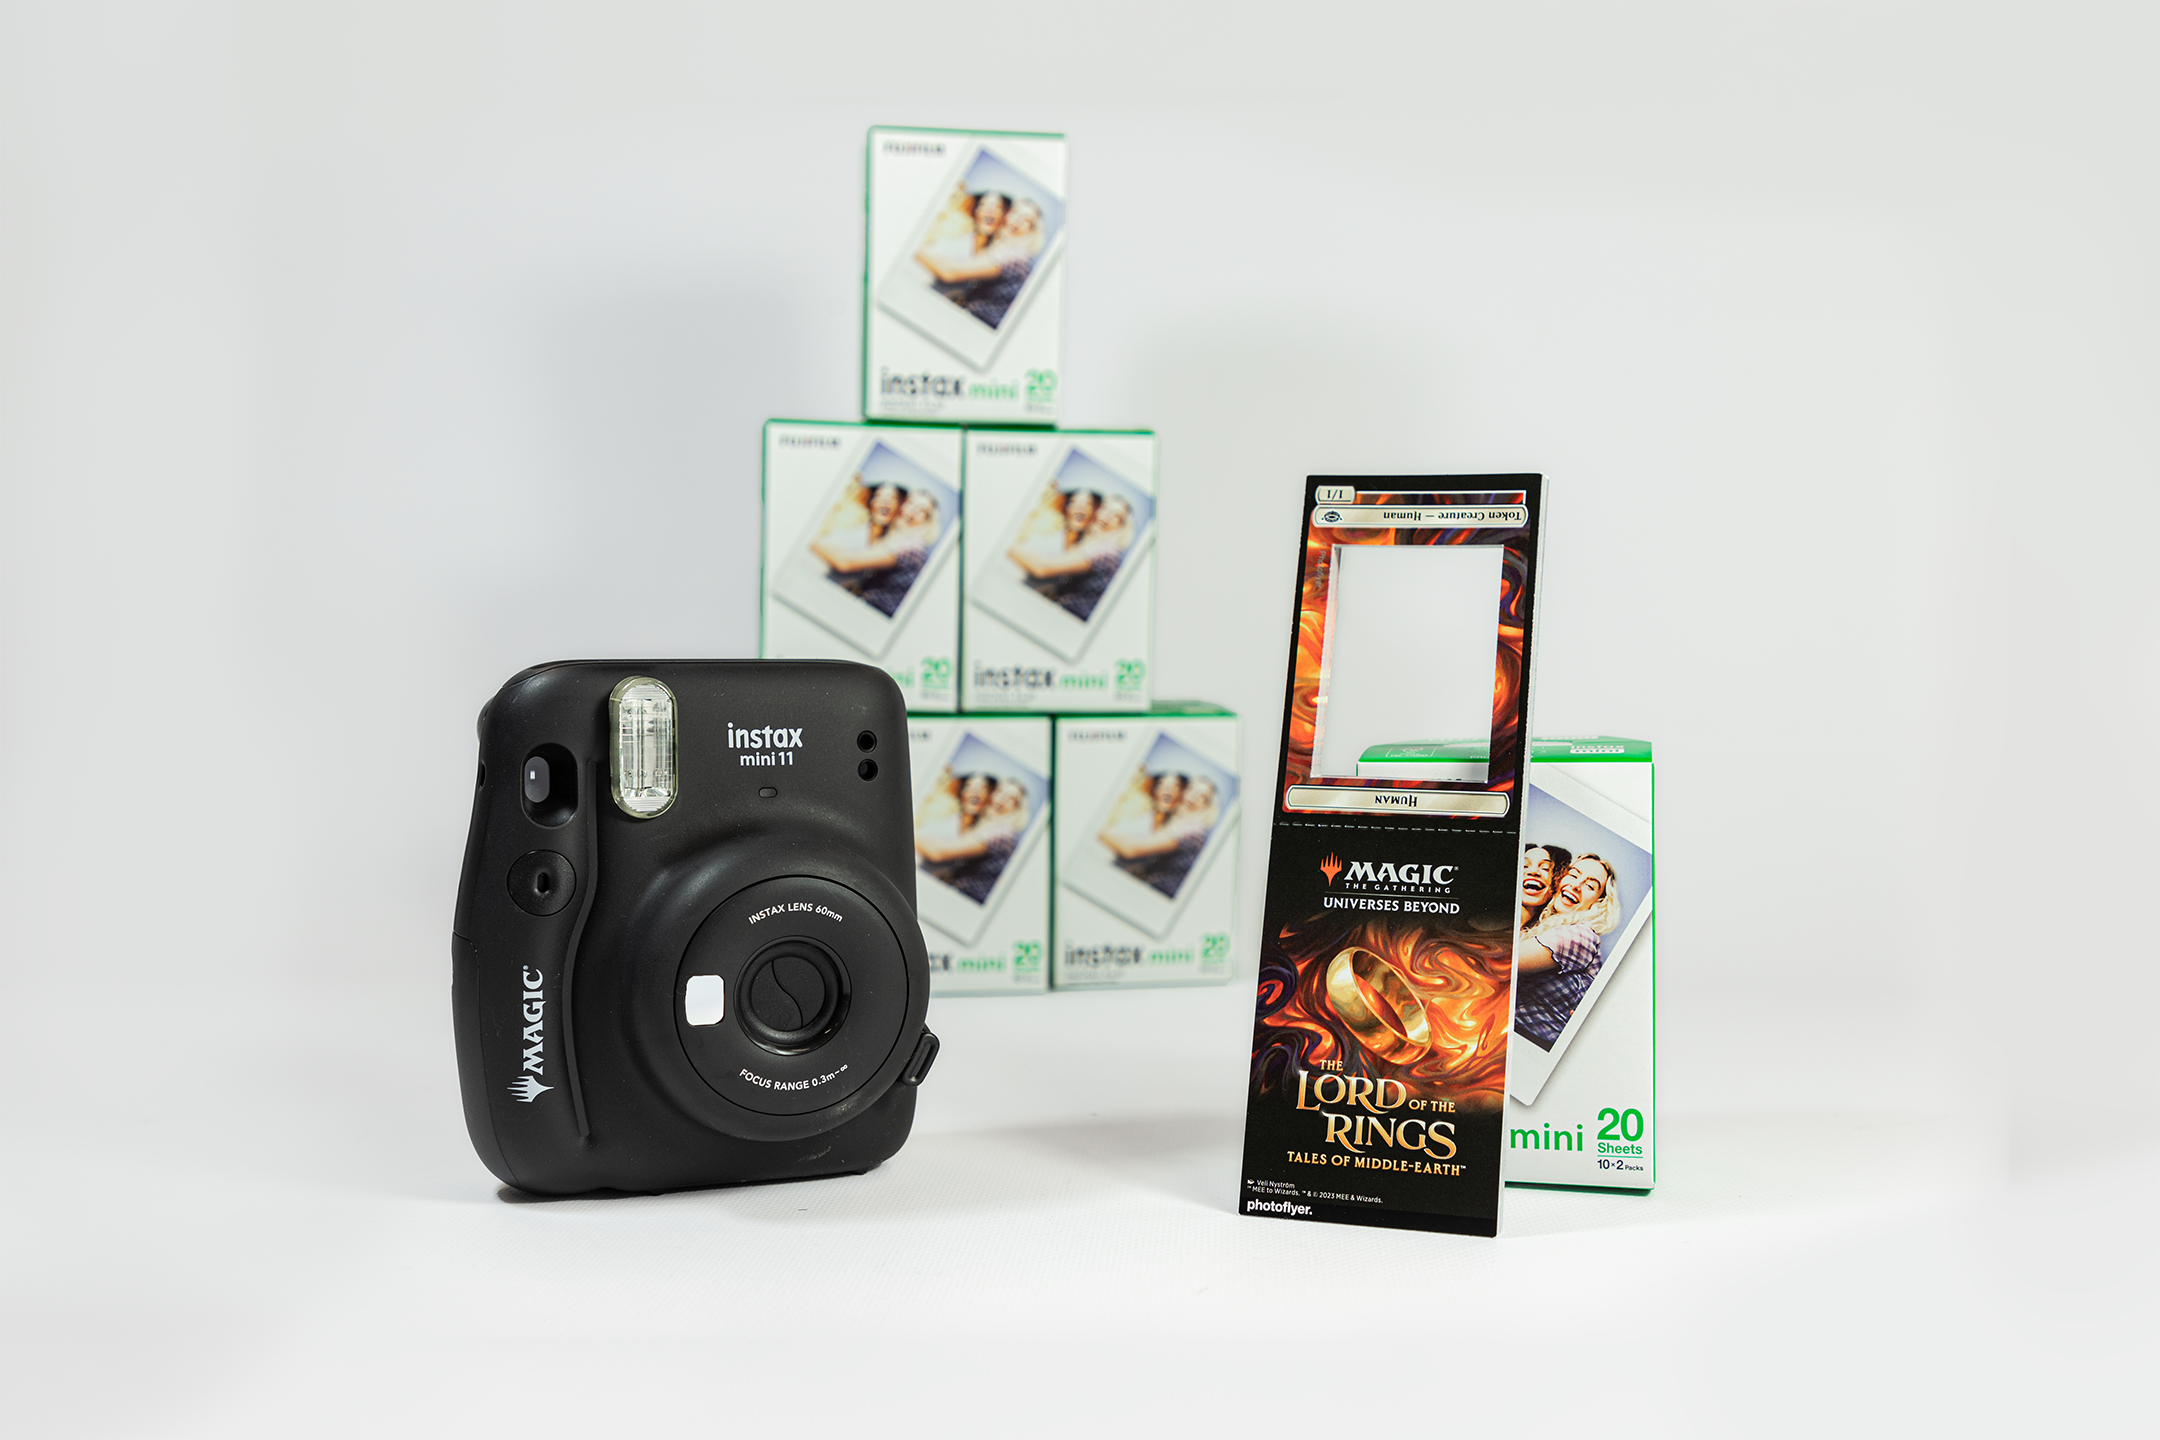 WPN Premium kit contents: an Instax Miini camera, packs of film, and 1/1 human token souvenir frame